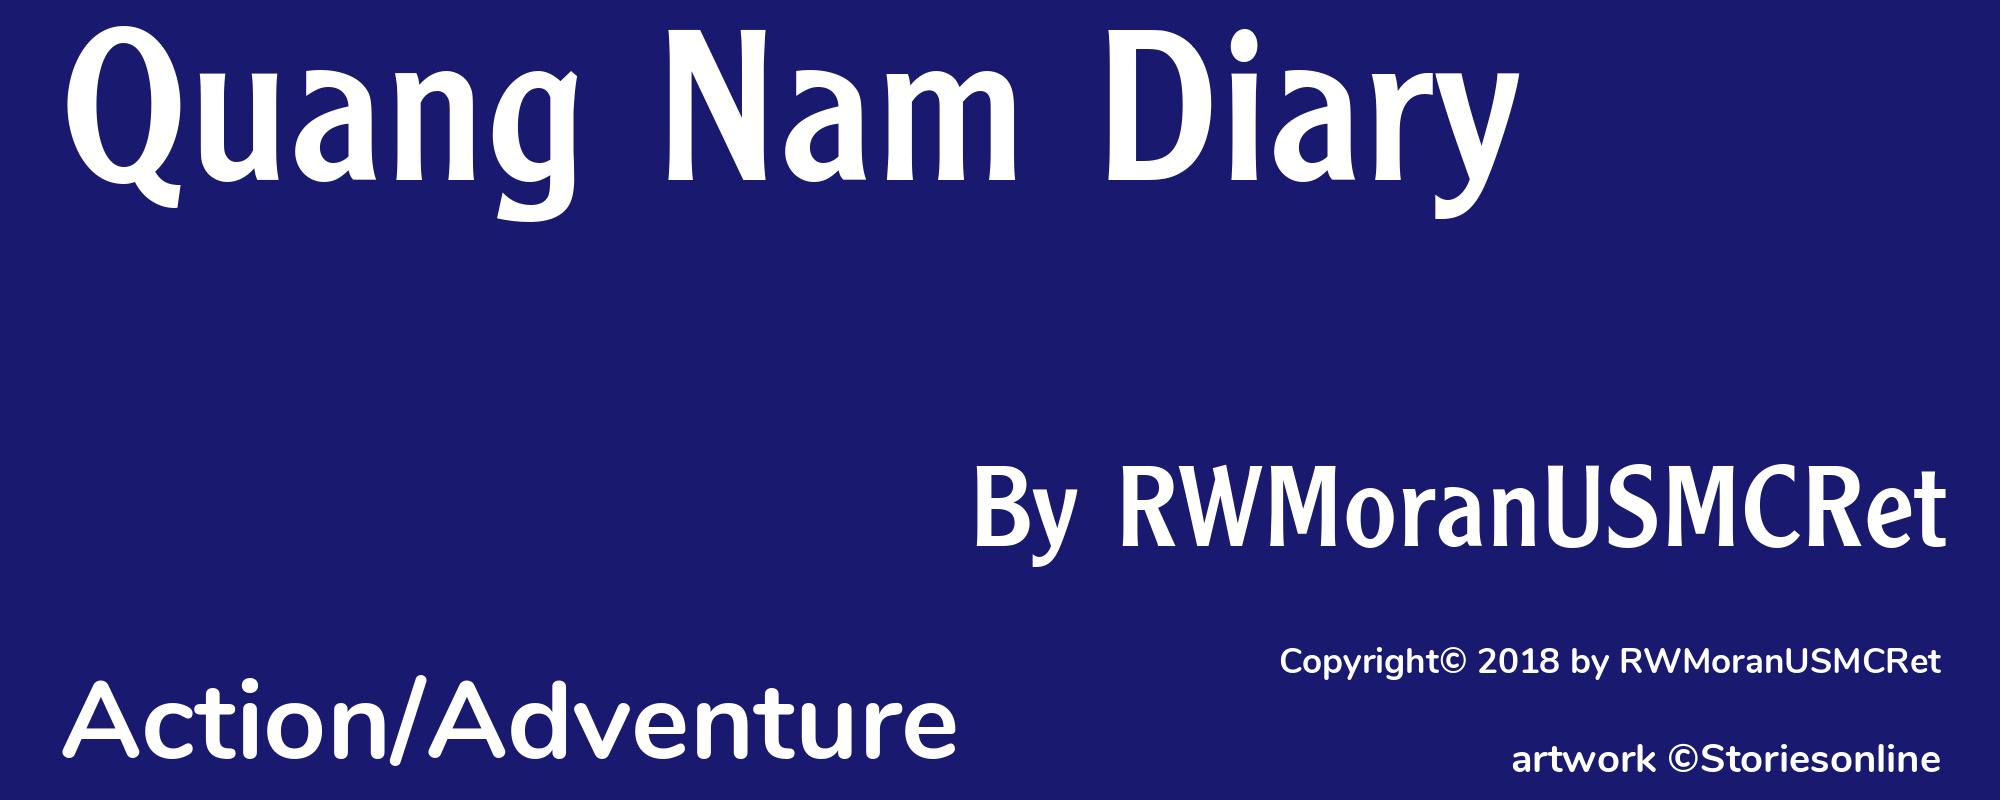 Quang Nam Diary - Cover